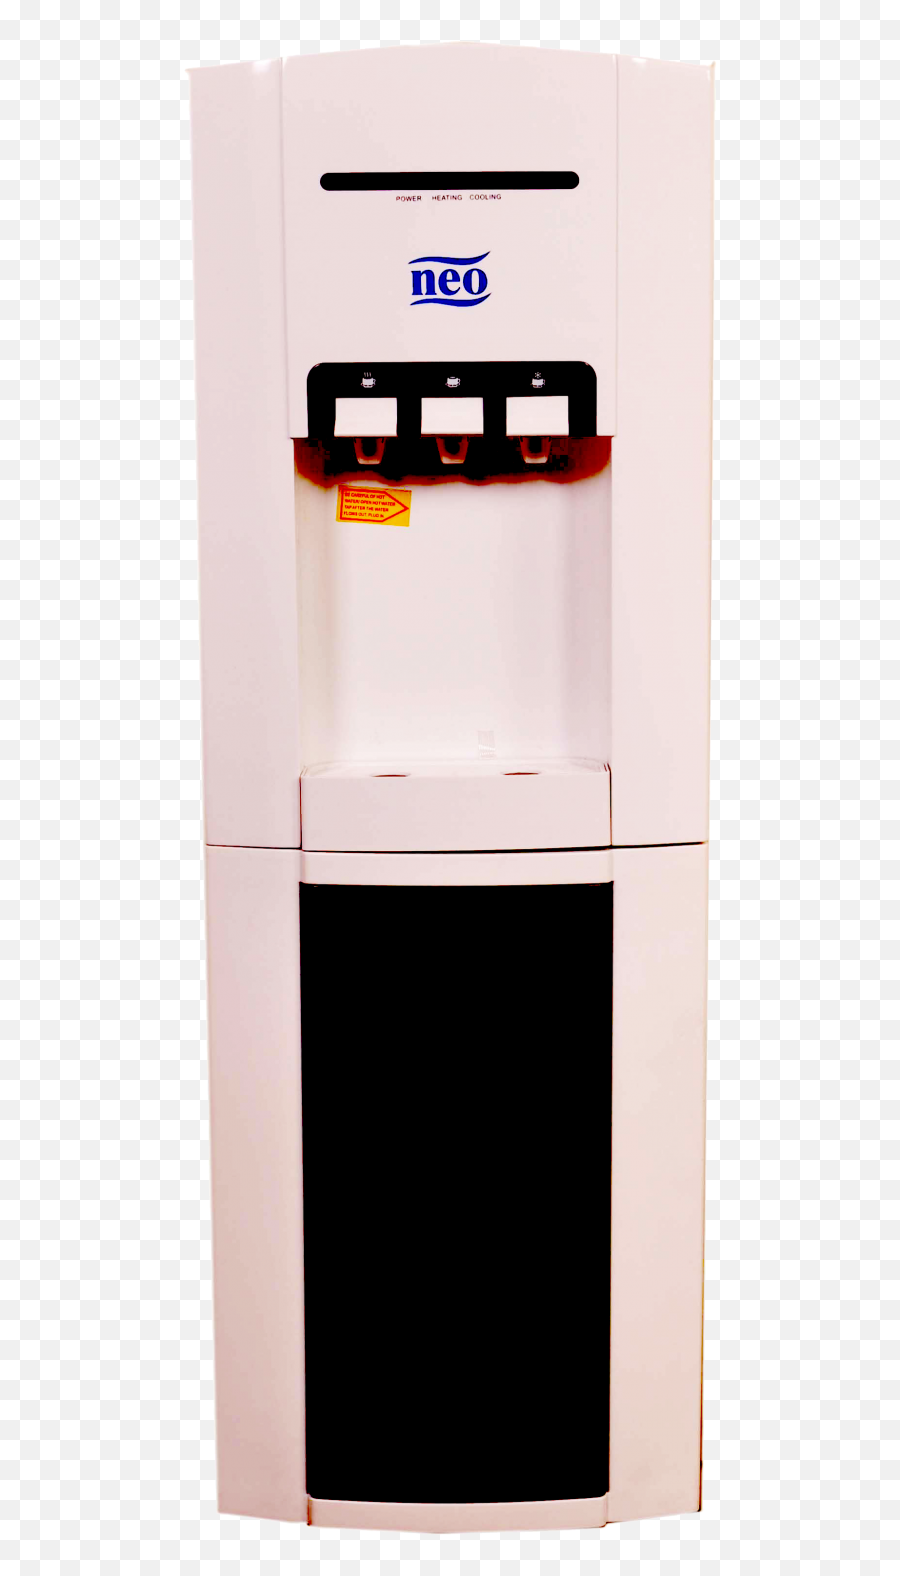 Neo Ro Water Purifier With Dispenser - Major Appliance Emoji,Ice Burga Mixed Emotions